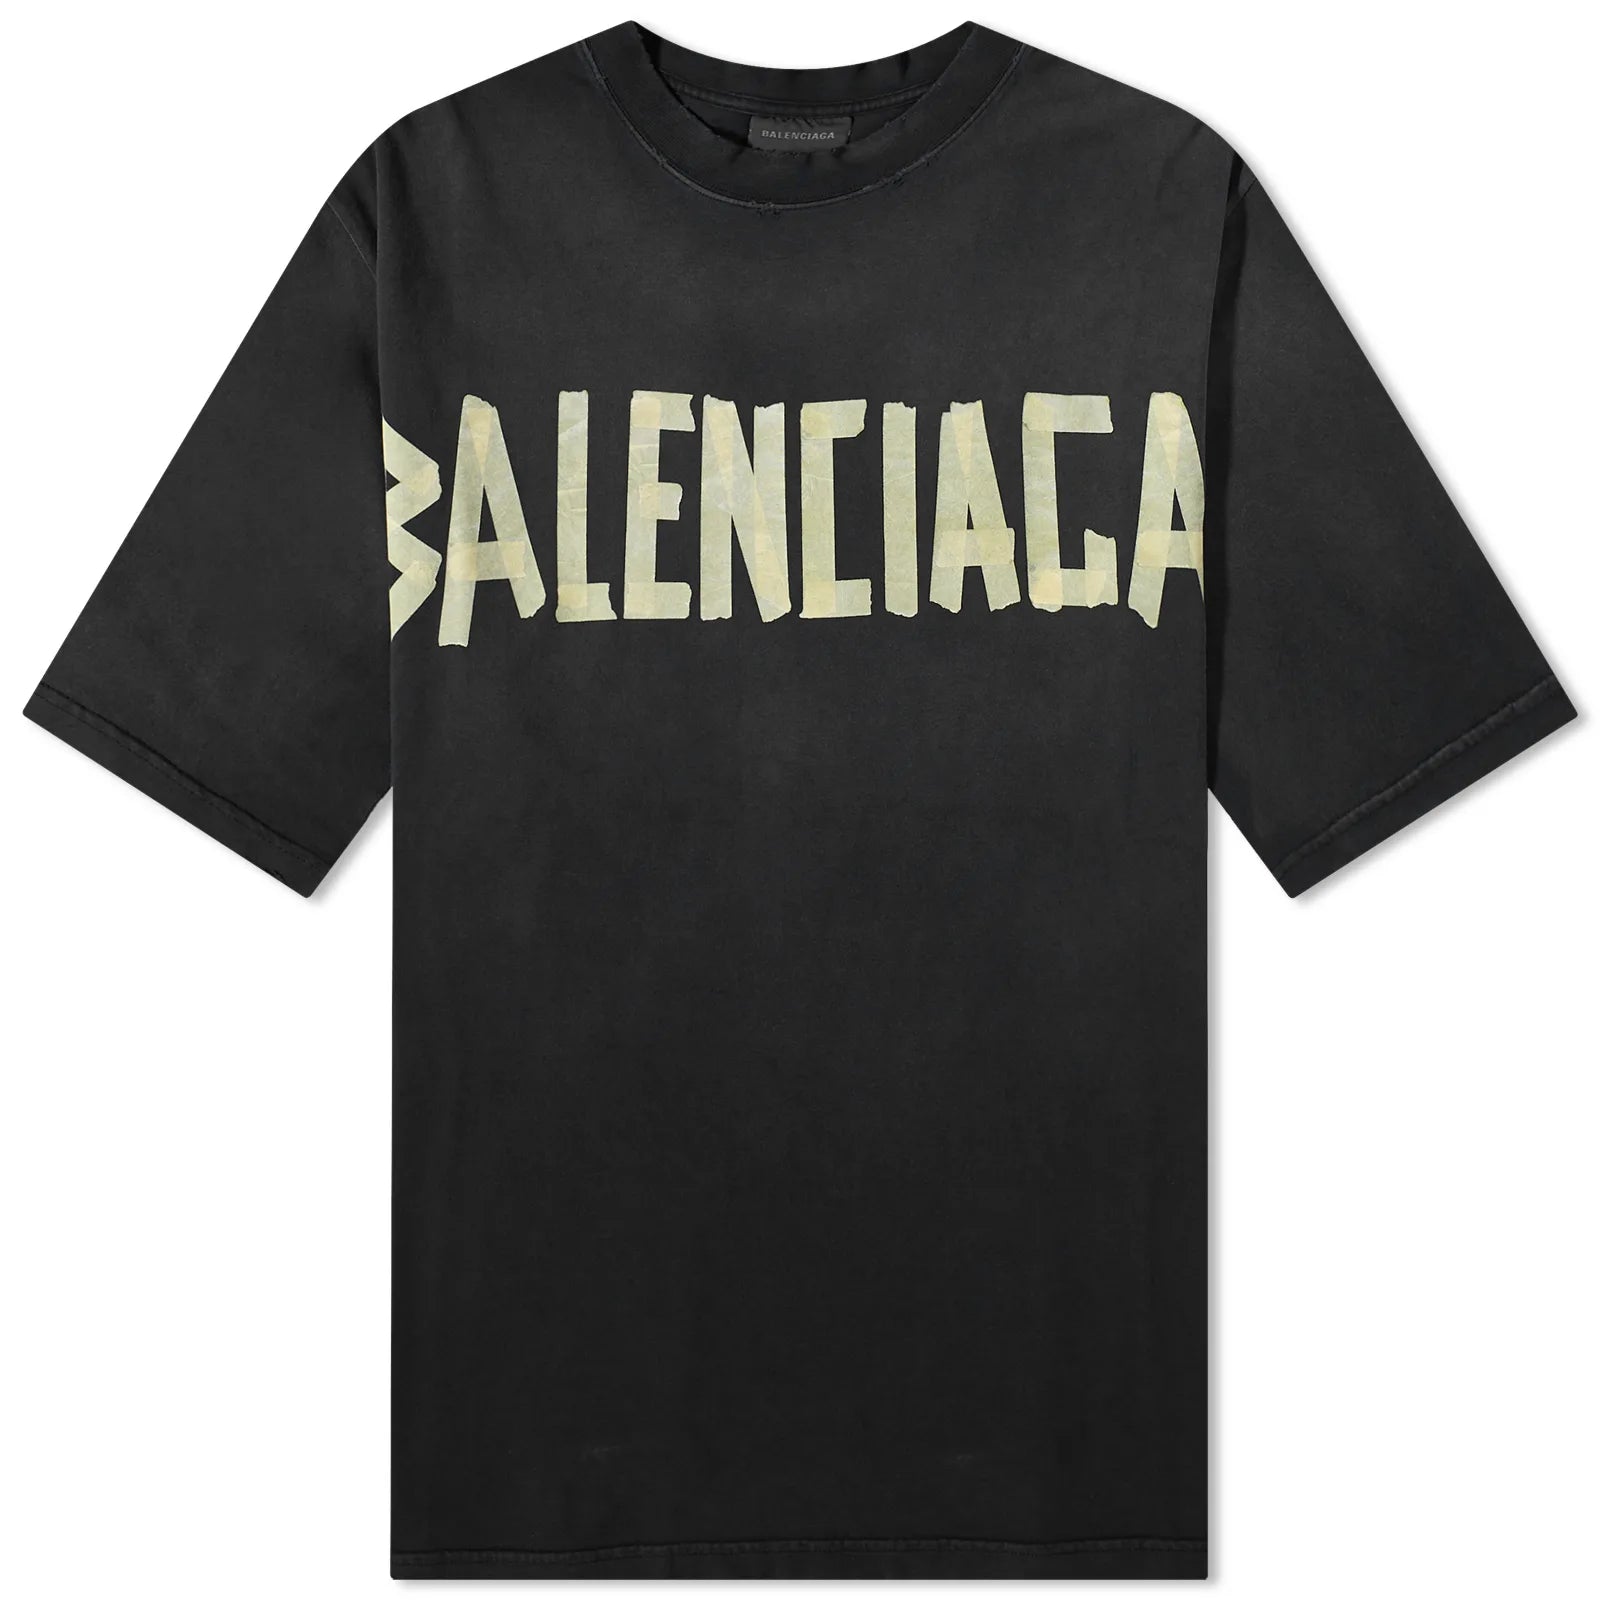 BALENCIAGA TAPE TYPE T-SHIRT WASHED BLACK